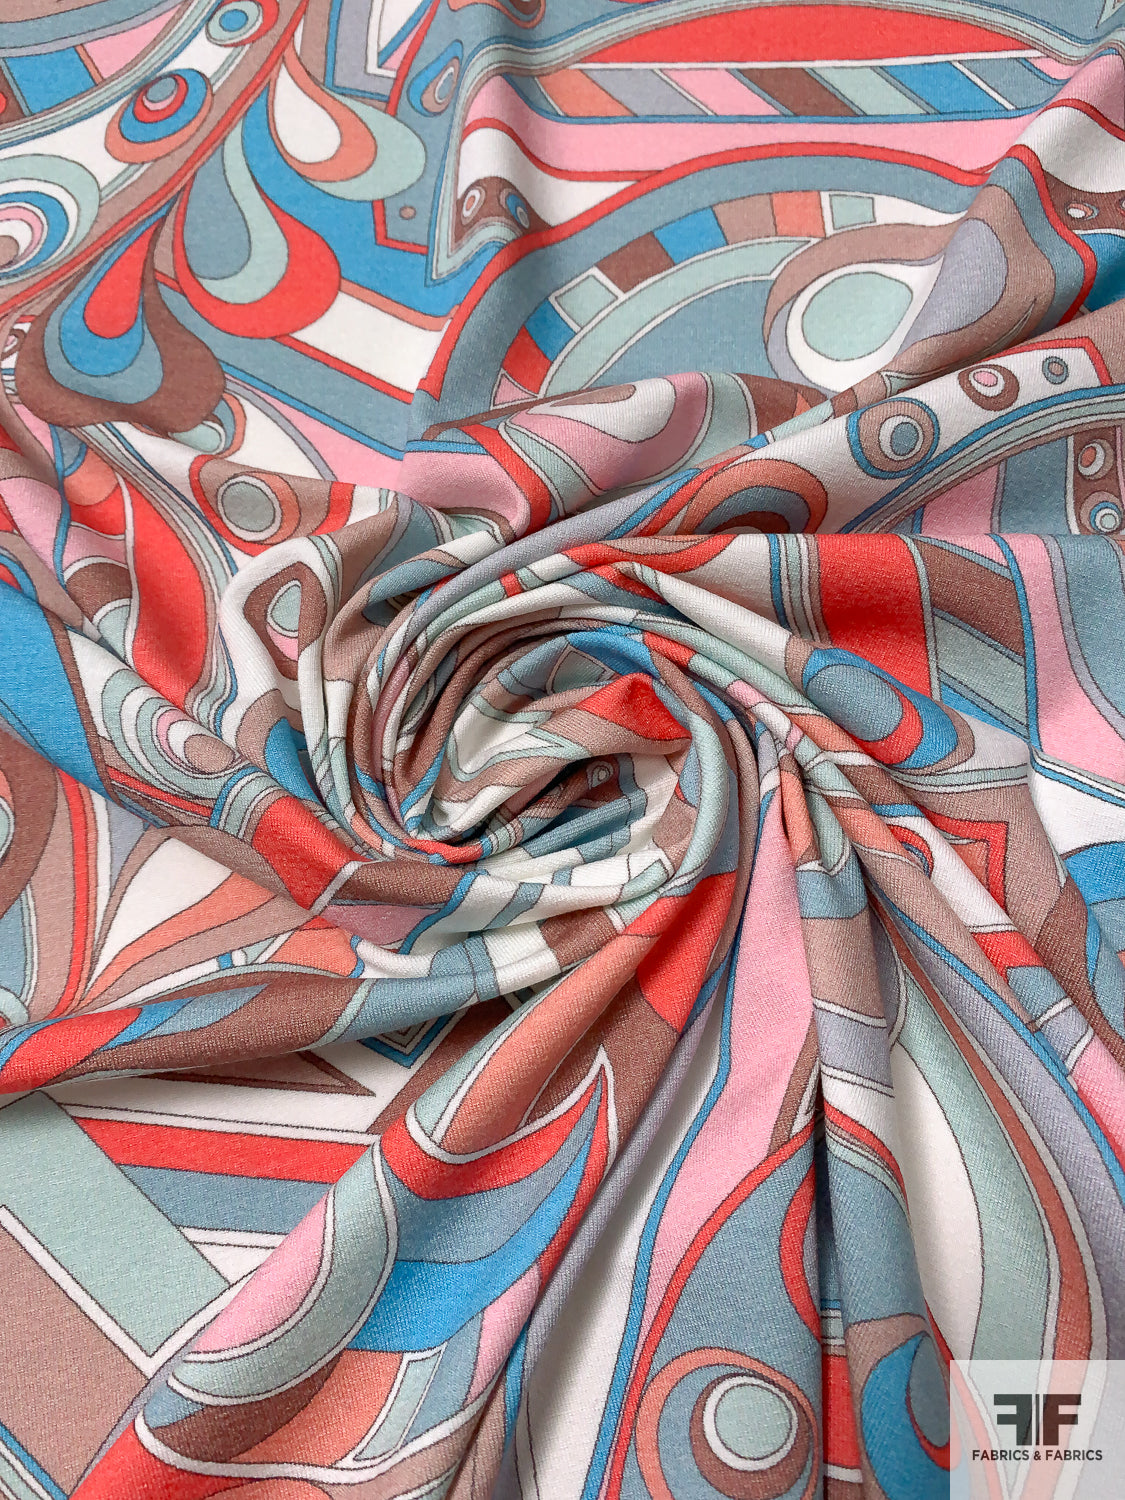 & | Printed Knit FABRICS Jersey Pucci-esque Fabrics FABRICS Fabrics & - Deep Paisley – Coral/Blues/Browns/Pink Stretch